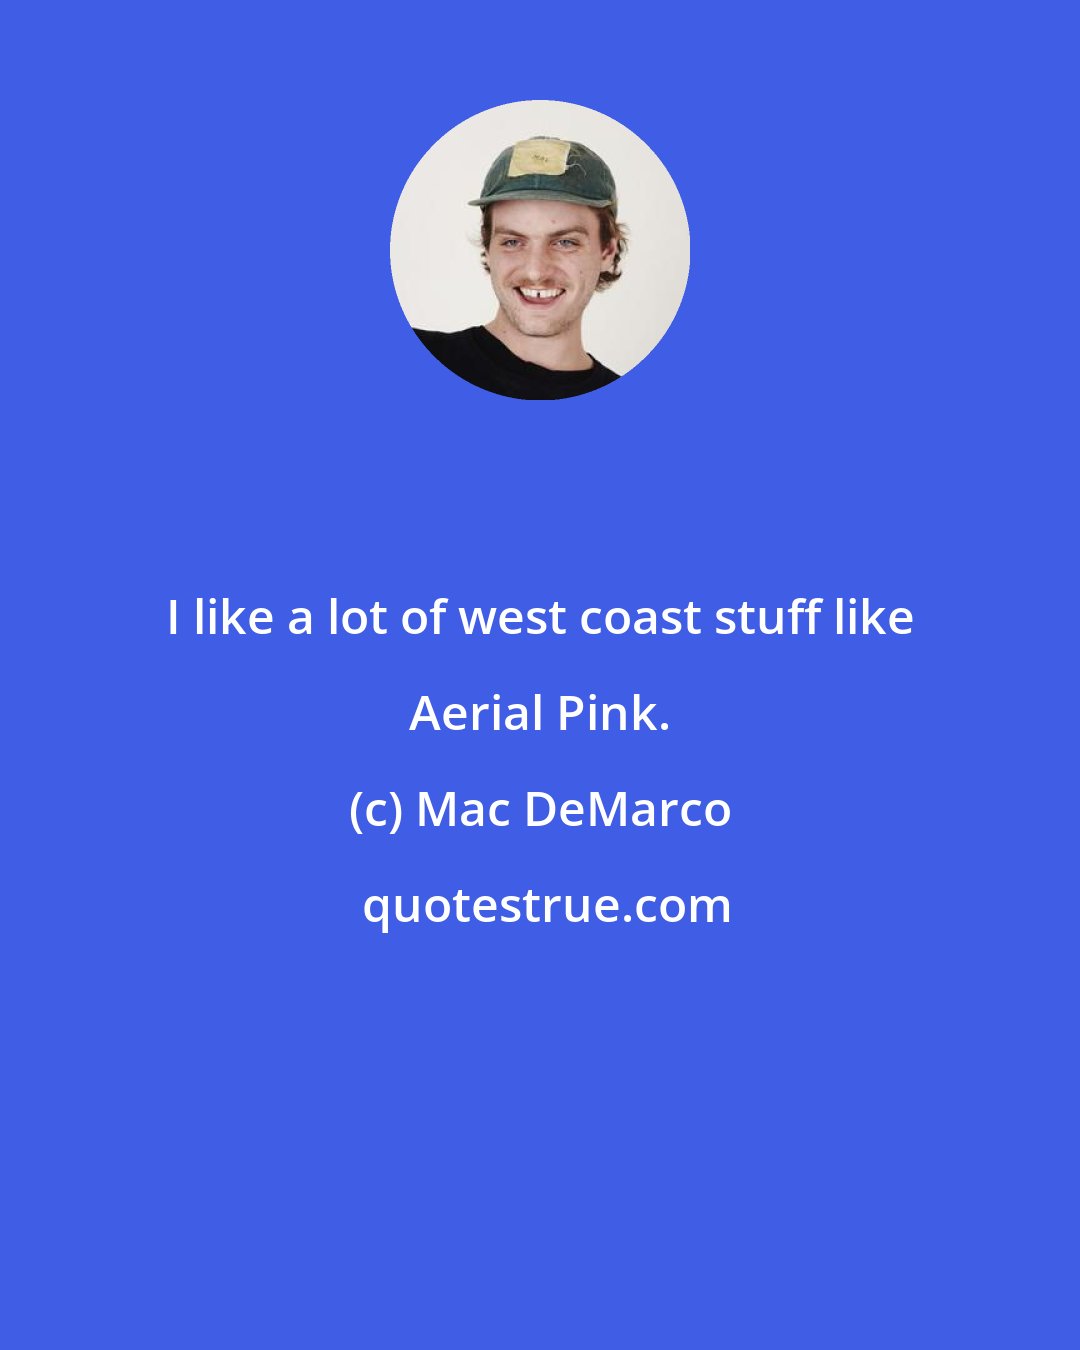 Mac DeMarco: I like a lot of west coast stuff like Aerial Pink.